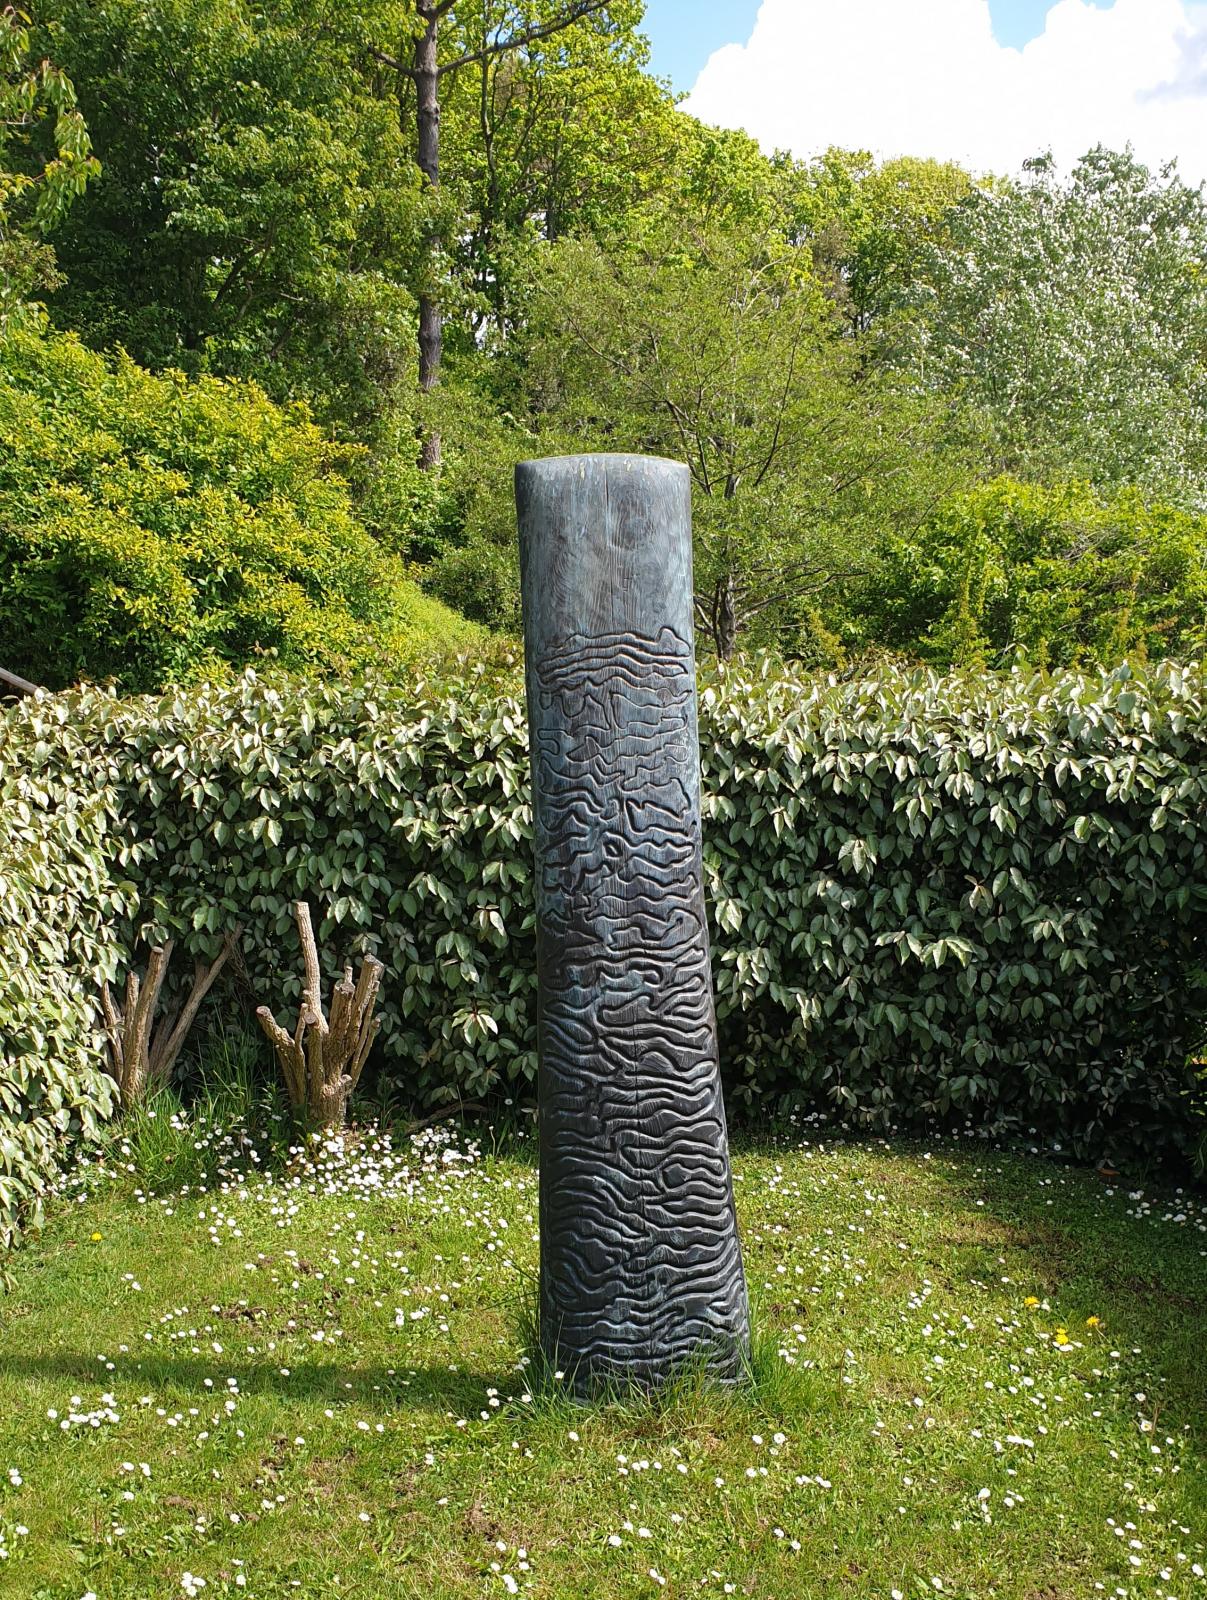 Ripple by Michael Fairfax, part of the Sculpture Trail in Langmoor Gardens, Lyme Regis